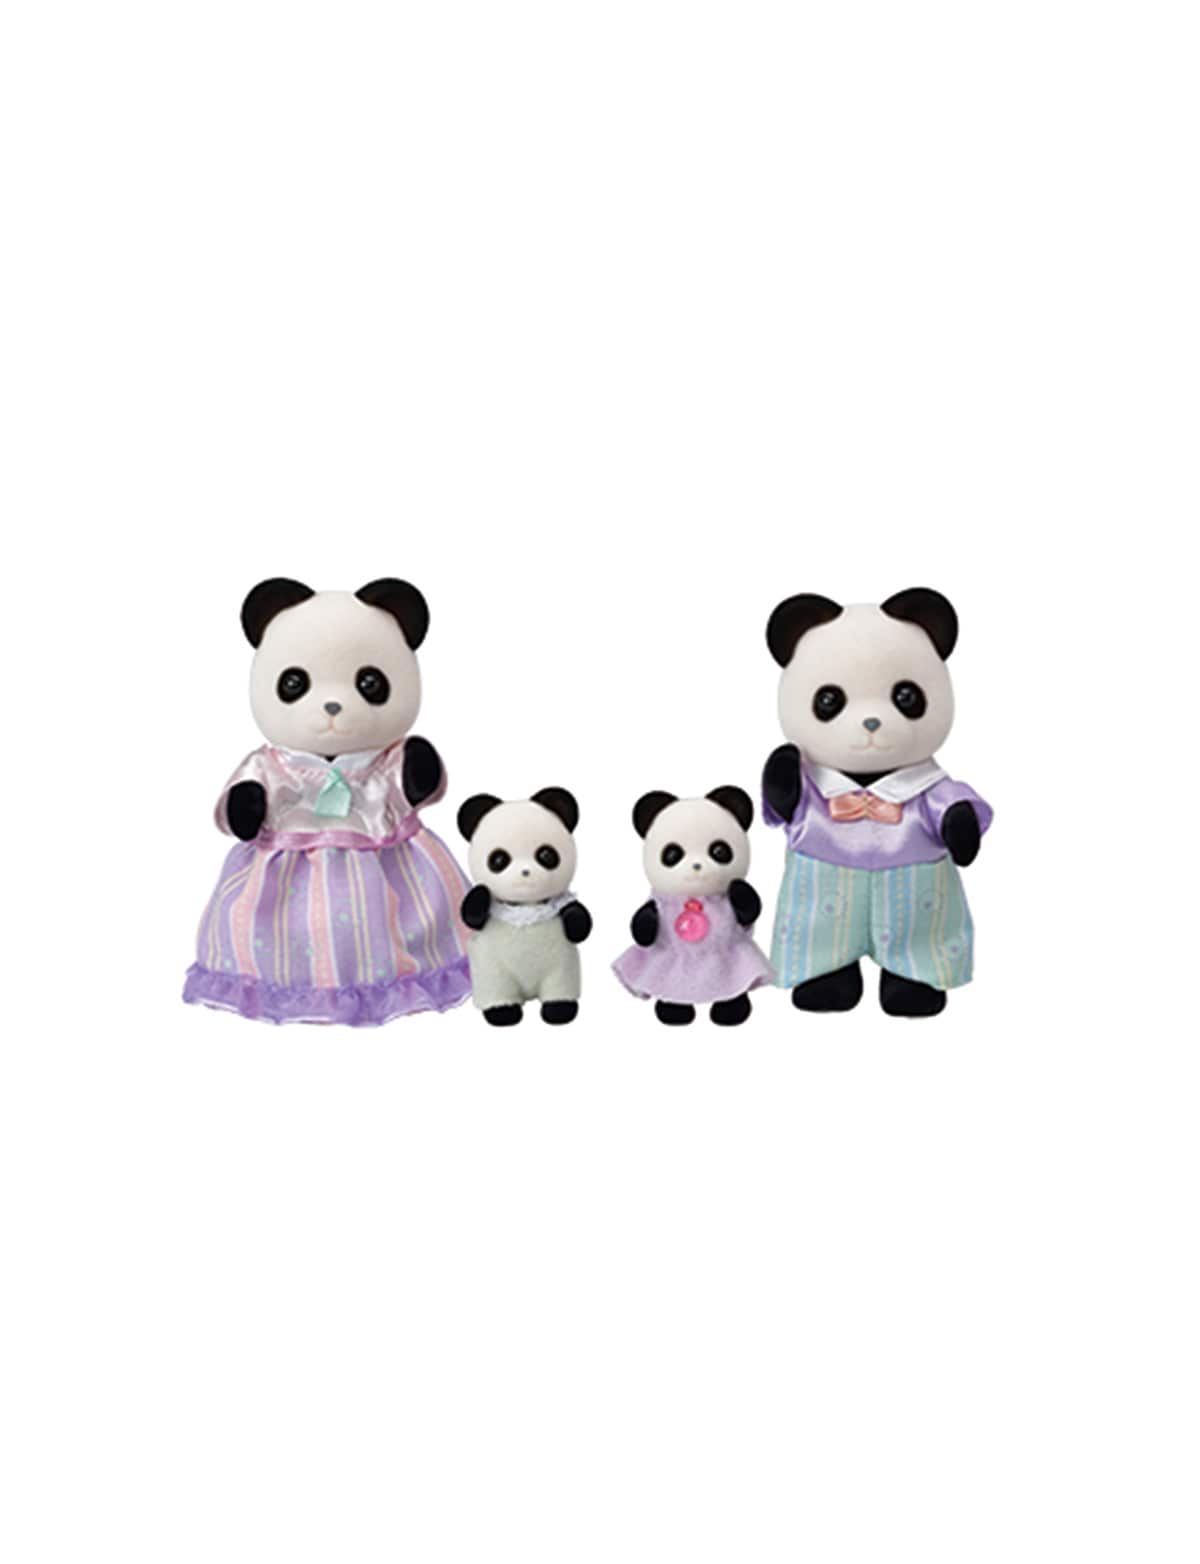 Sylvanian Families Pookie Panda Family (3+ years) - Alouette